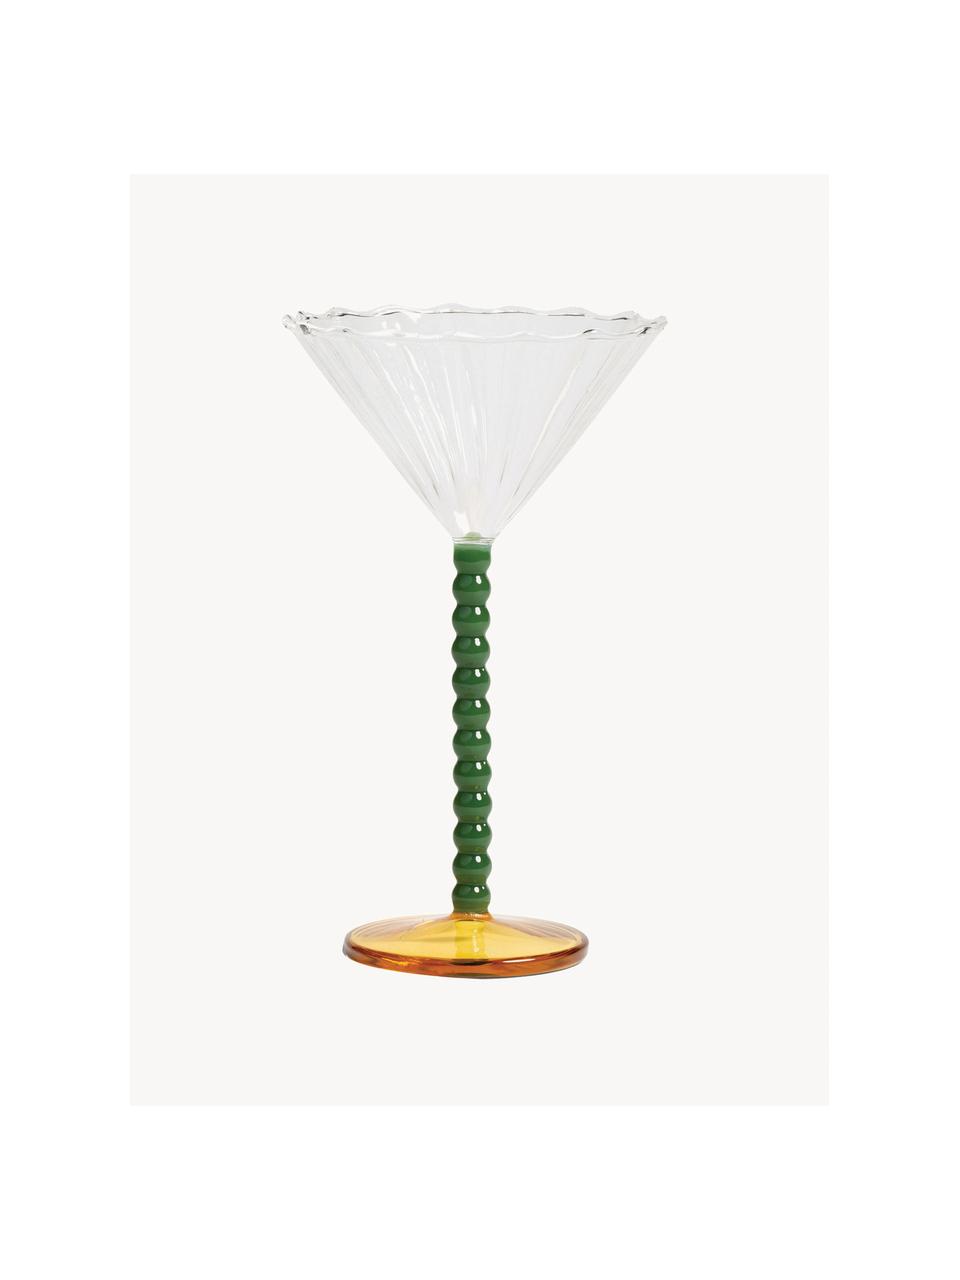 Cocktailglazen Perle uit borosilicaatglas, 2 stuks, Borosilicaatglas, Transparant, donkergroen, oranje, Ø 17 x H 10 cm, 150 ml